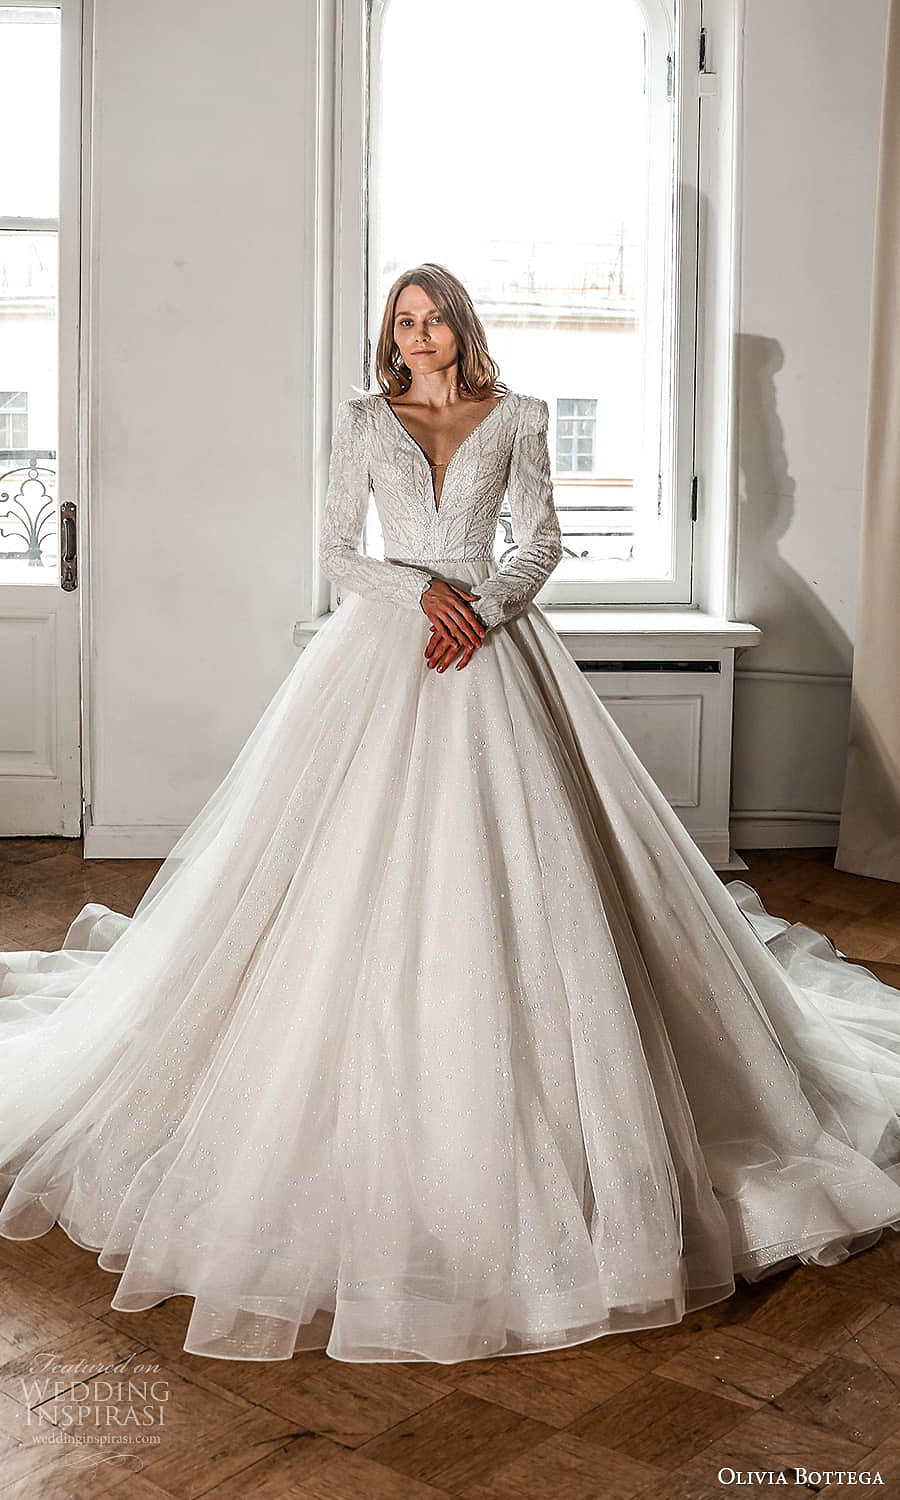 Olivia Bottega Pret-a-Porter 新娘系列 优雅百搭新娘嫁衣 - 38